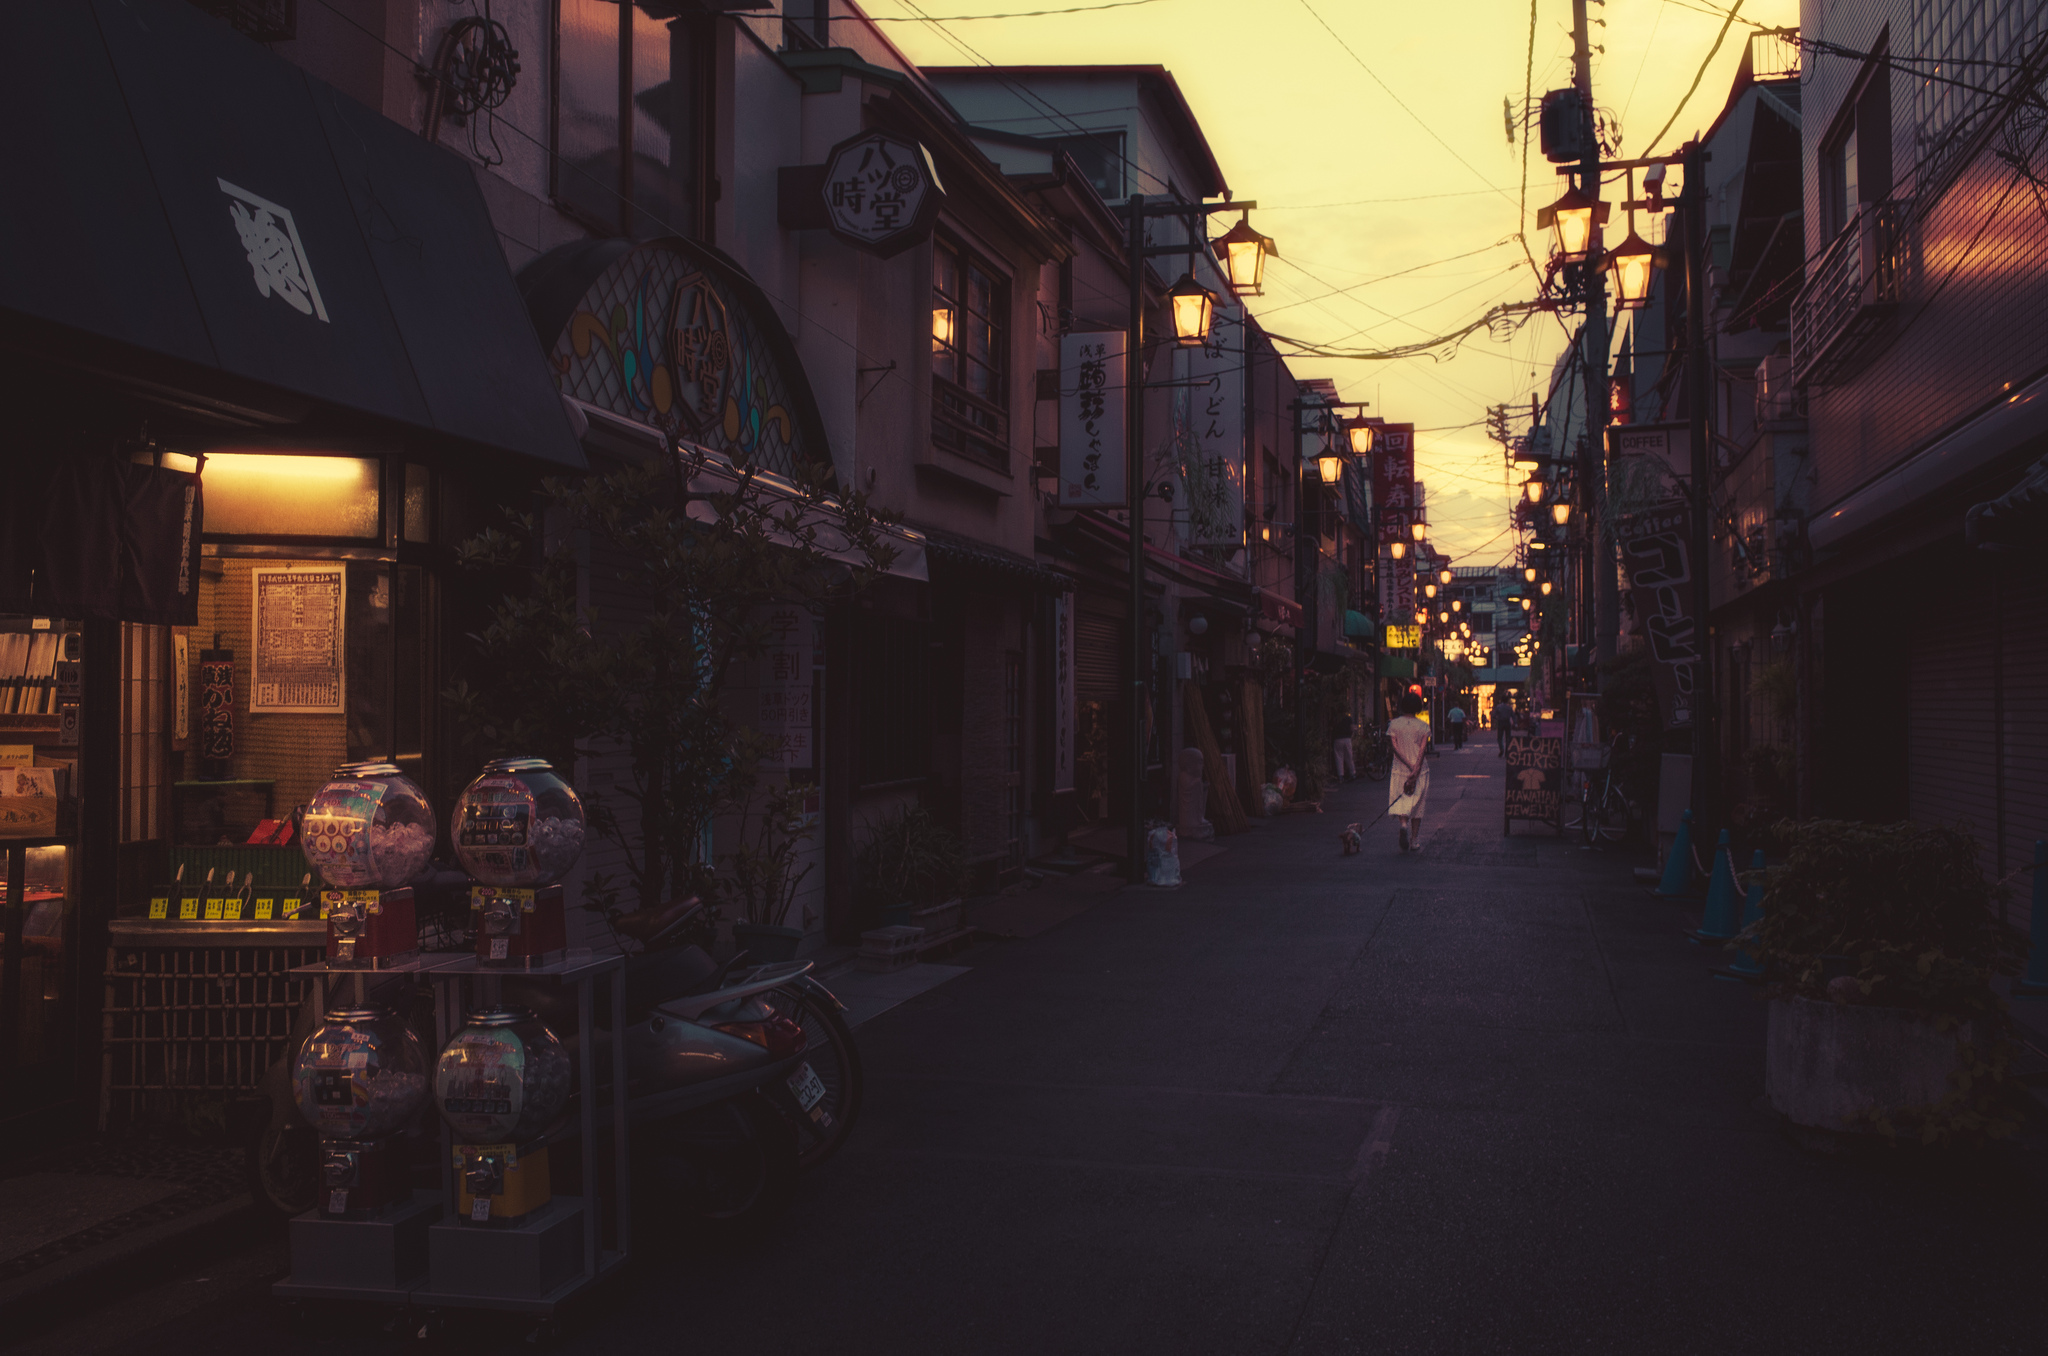 General 2048x1356 street Japan evening street light urban lights alleyway